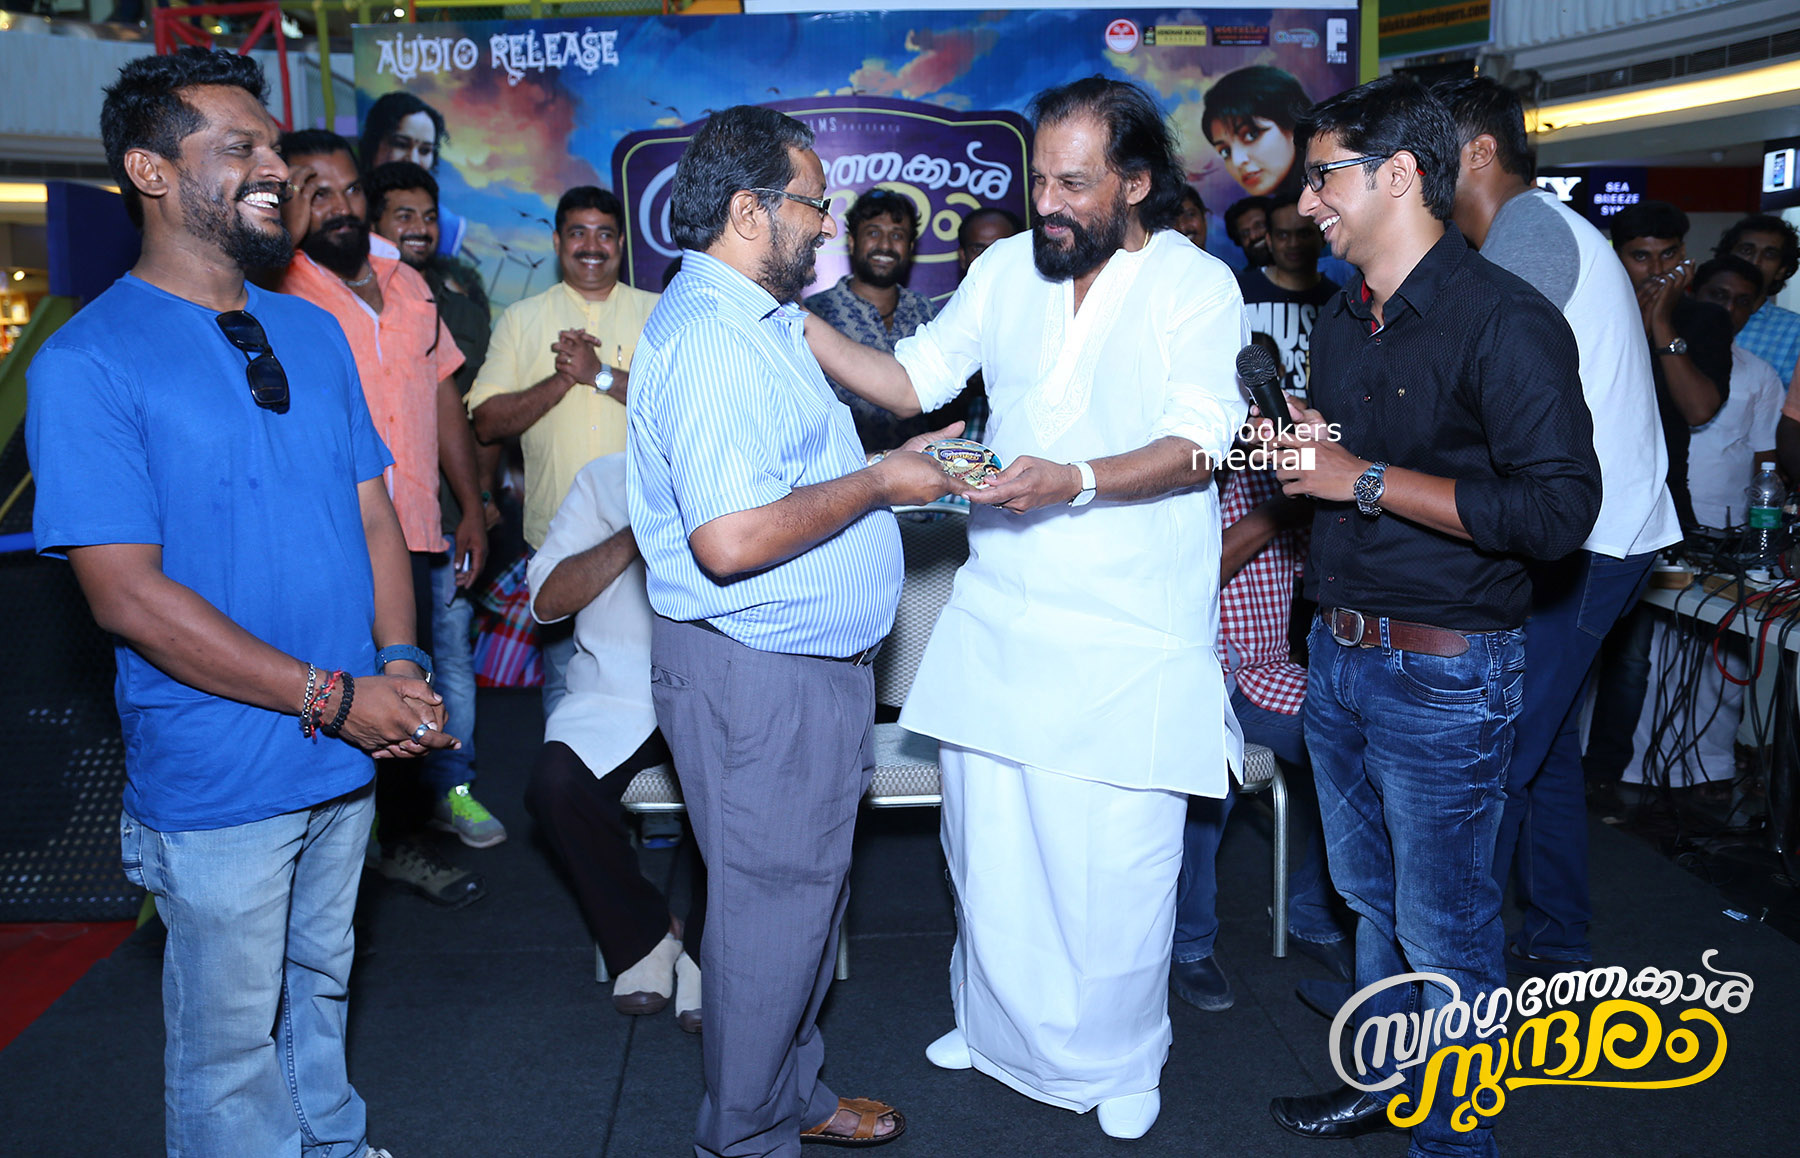 Swargathekkal Sundaram Audio Launch Stills-Lal-Sreenivasan-Mythili-Malayalam Movie 2015-Onlookers Media